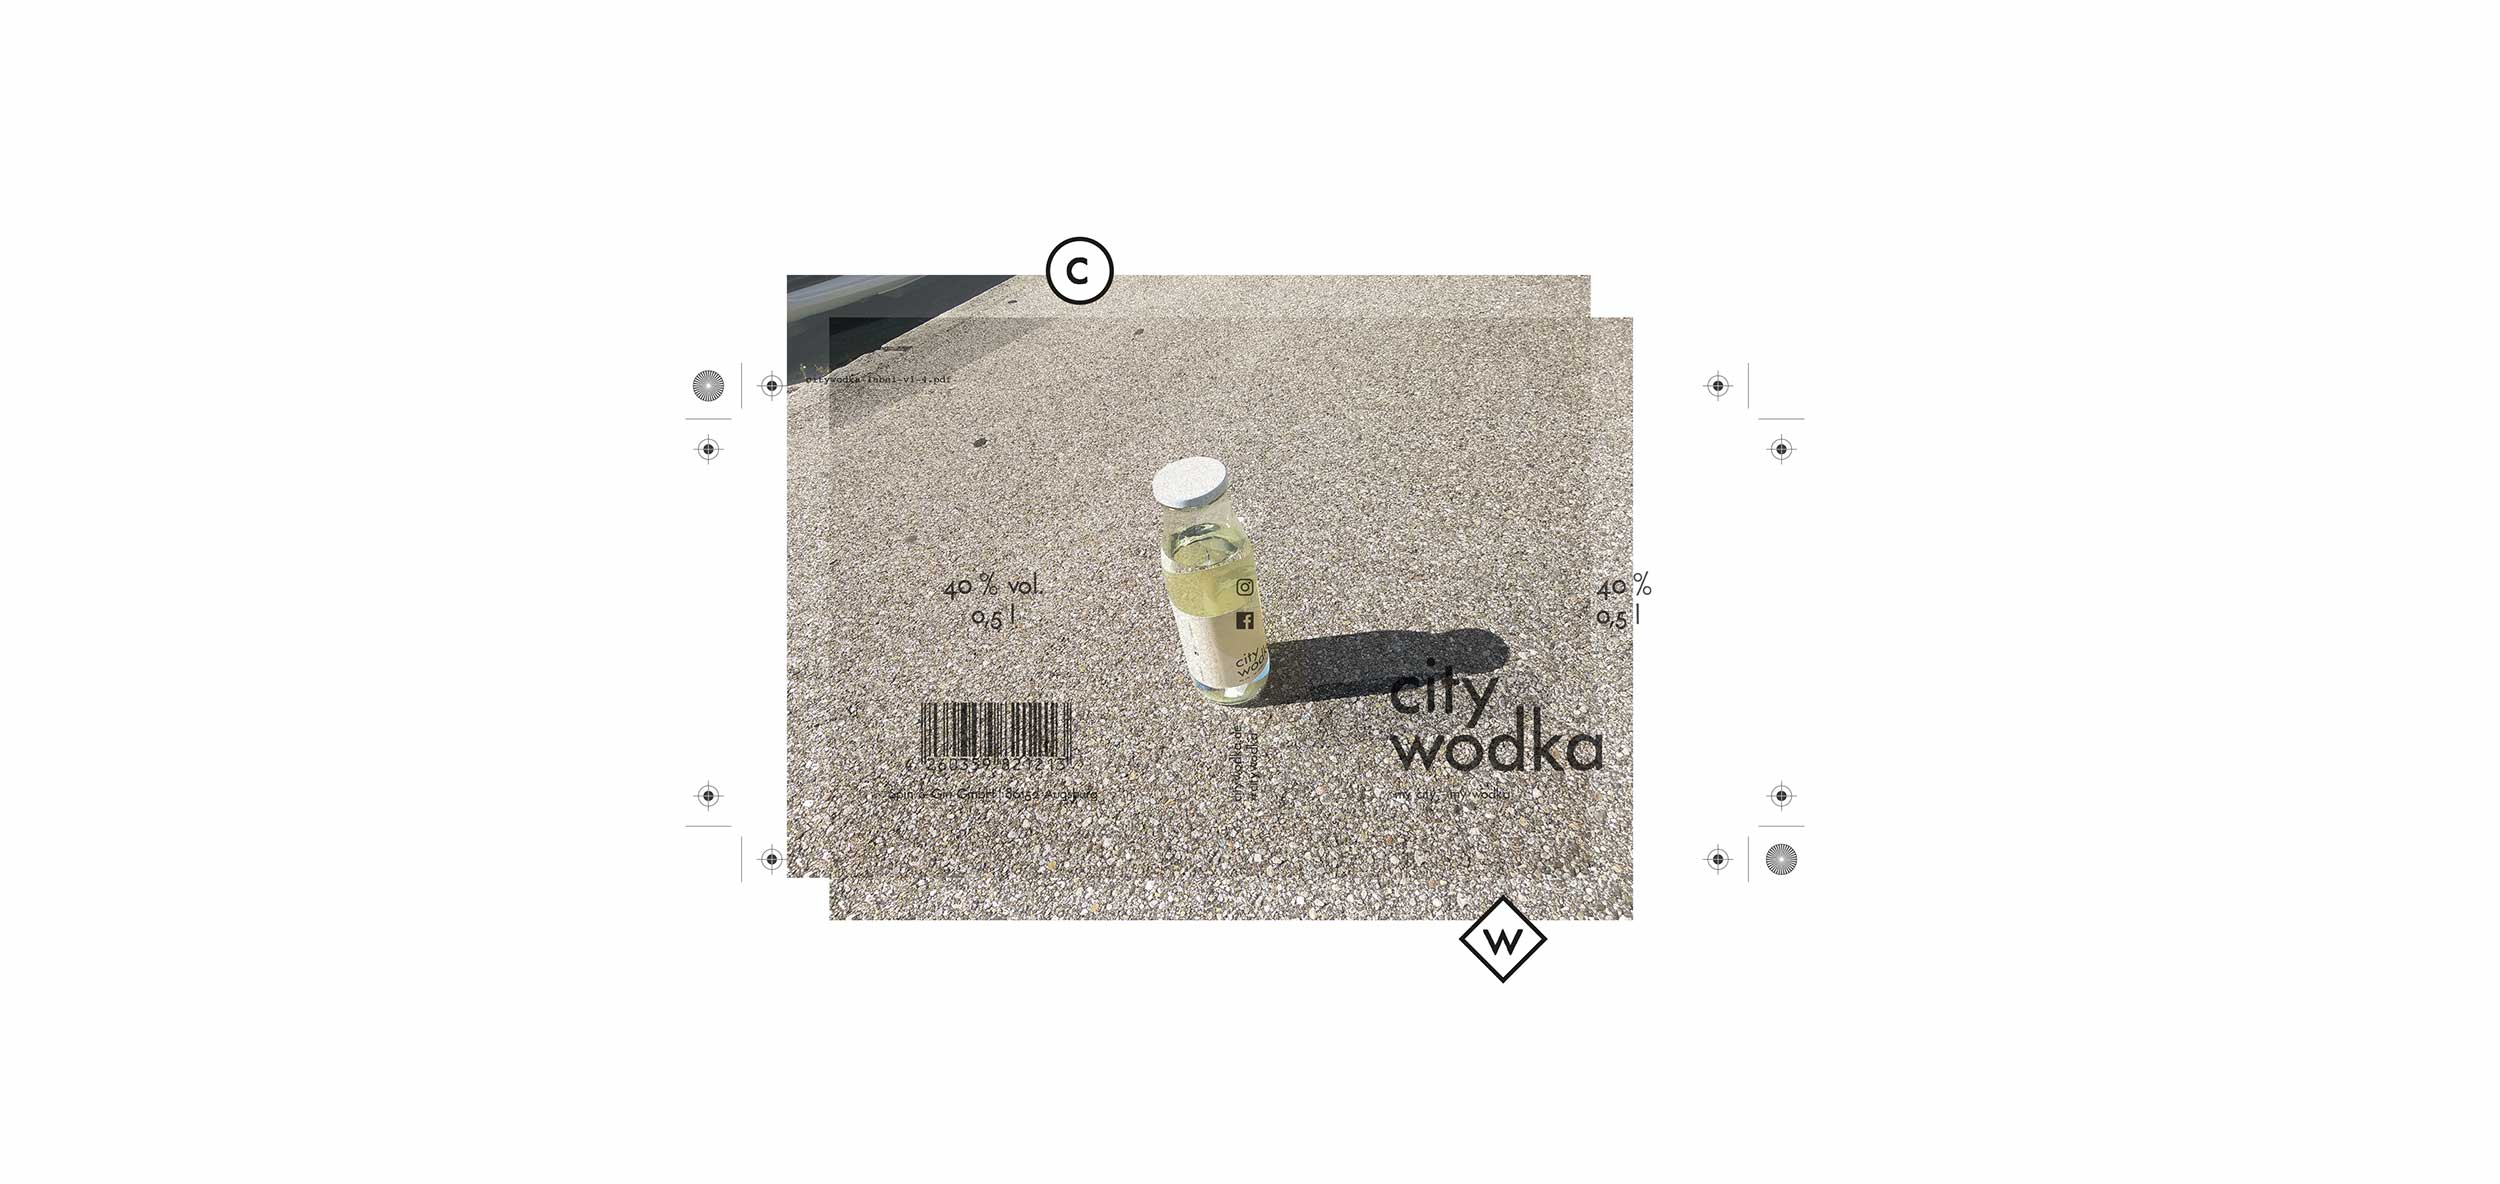 citywodka-design-logo-corporate-label-branding-blockundstift-11